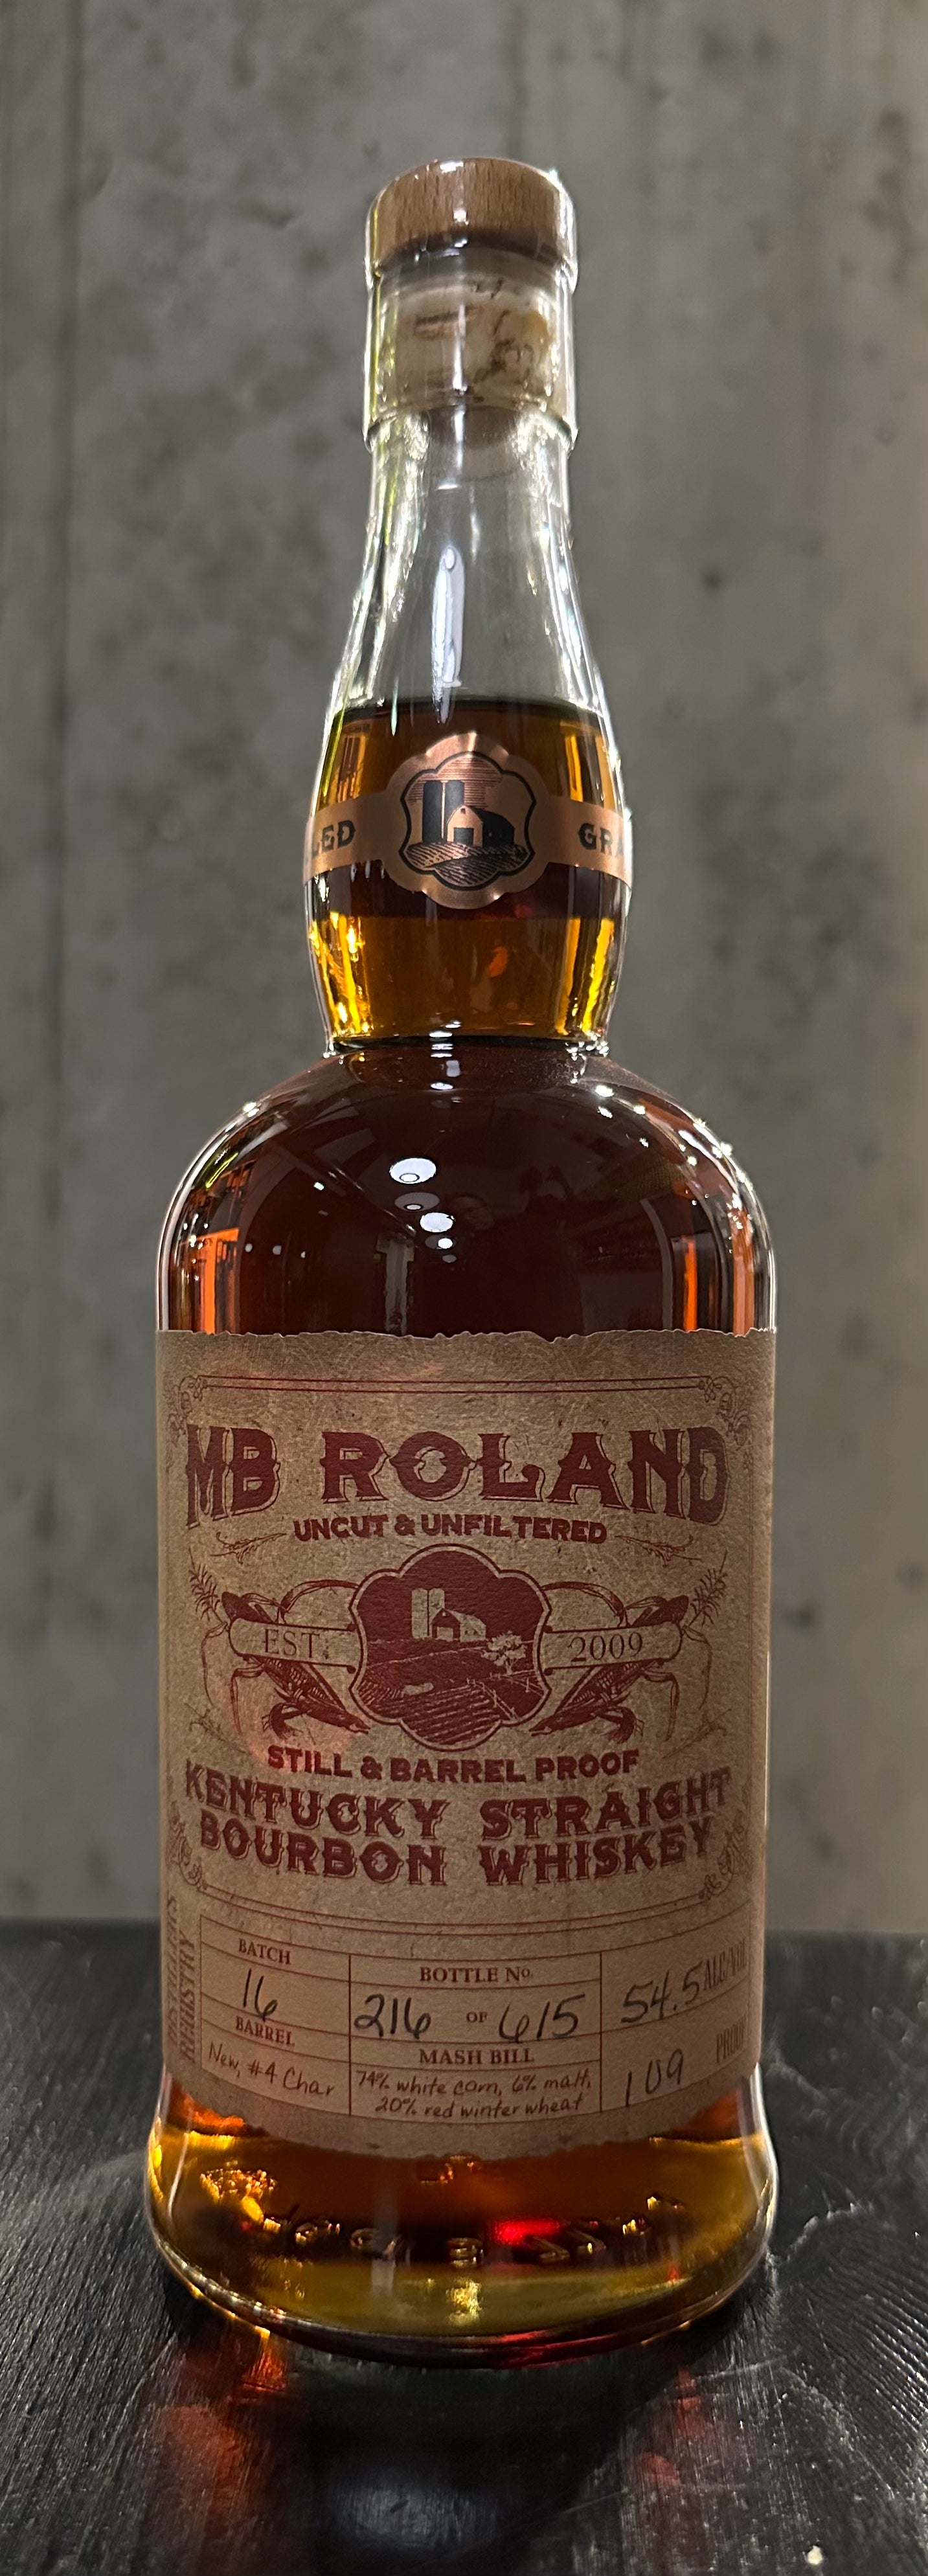 MB Roland "Wheated" Ketucky Straight Bourbon Whiskey